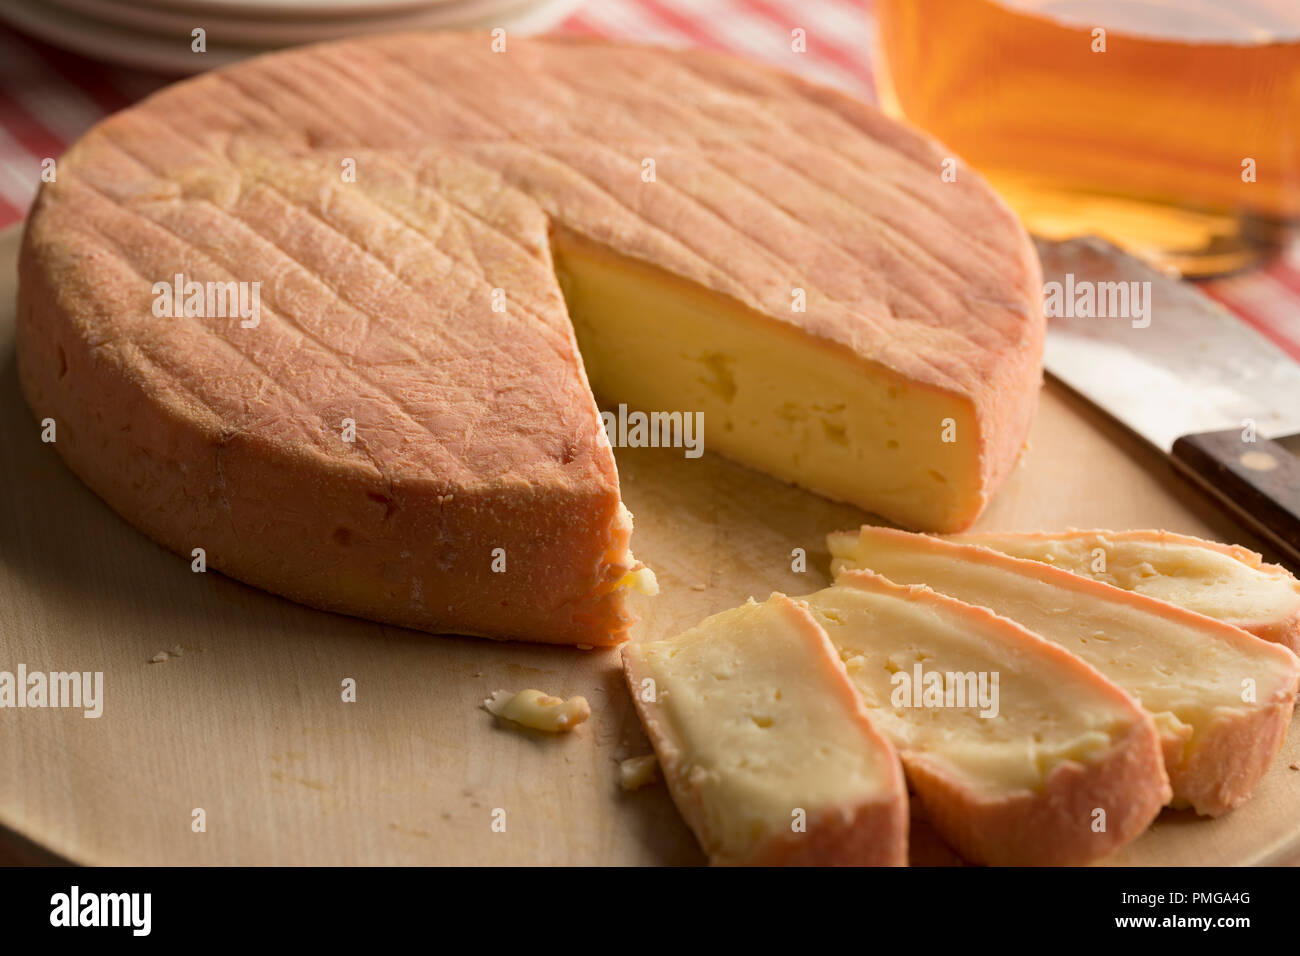 Trozo de queso Munster tradicional francesa y cortes. Foto de stock